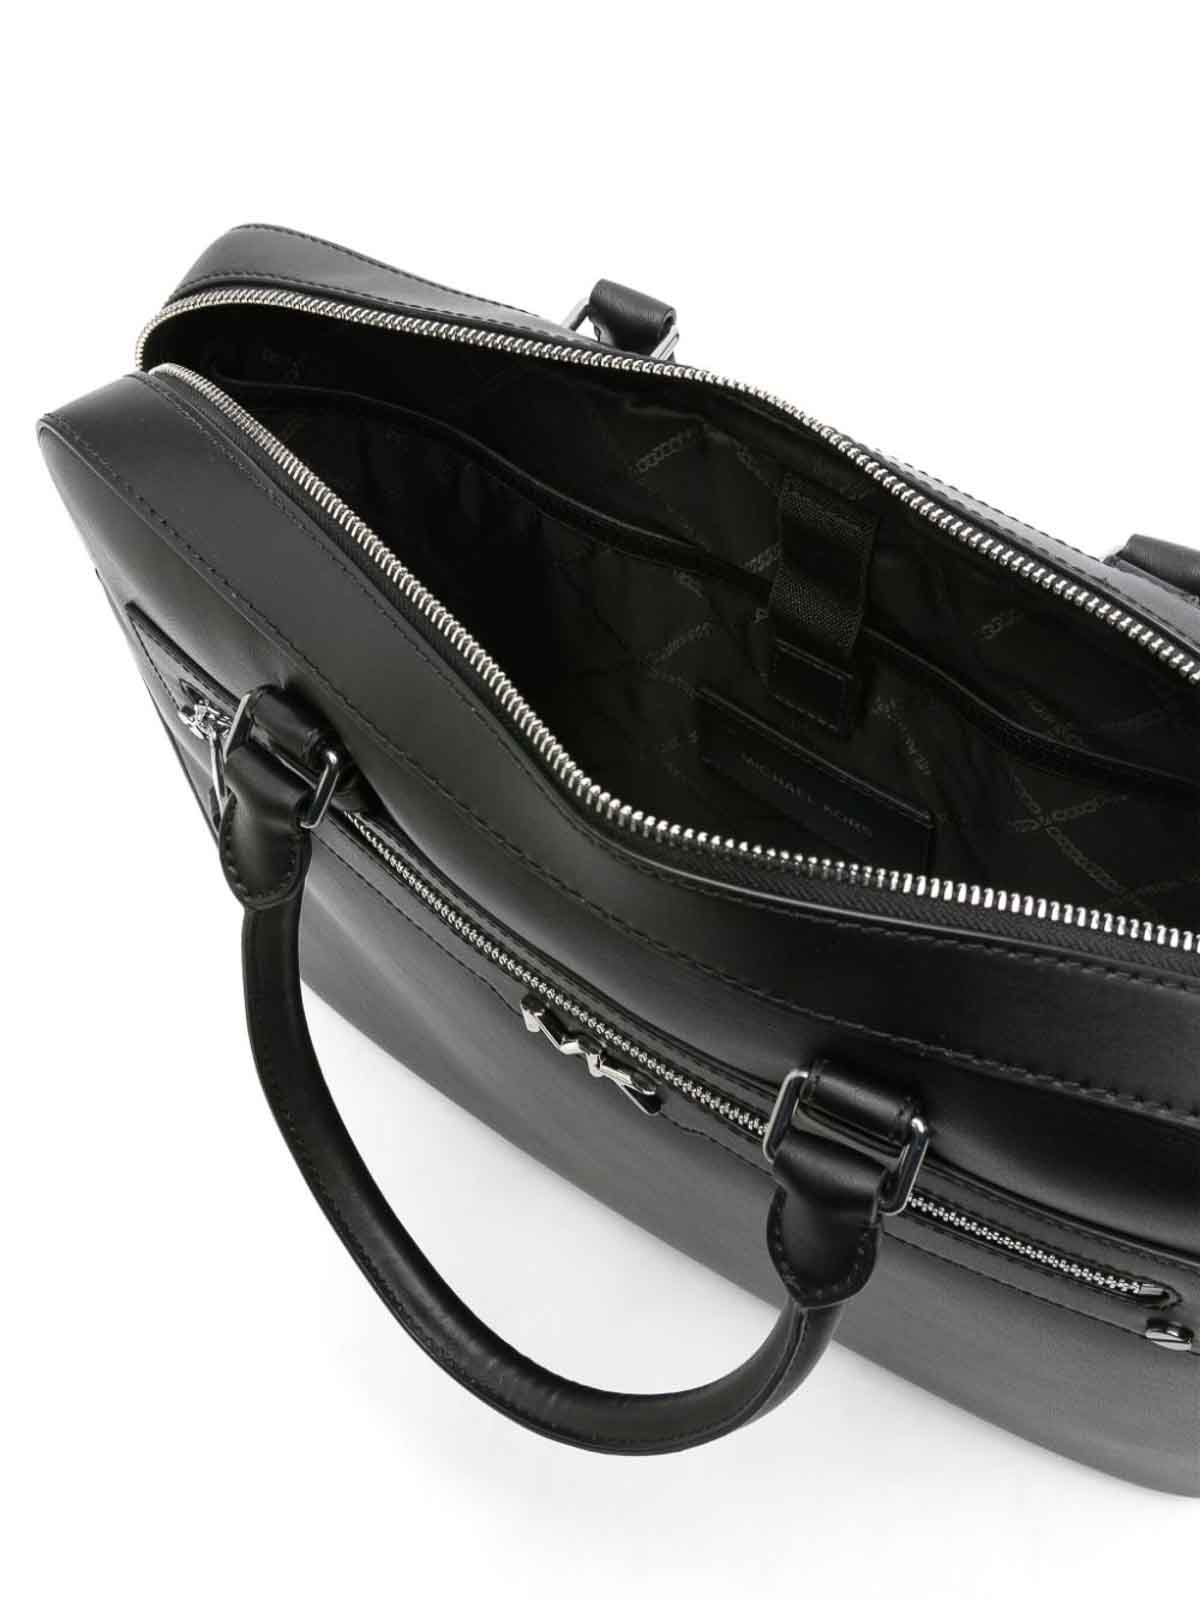 Hudson Pebbled Leather Travel Bag | Michael Kors